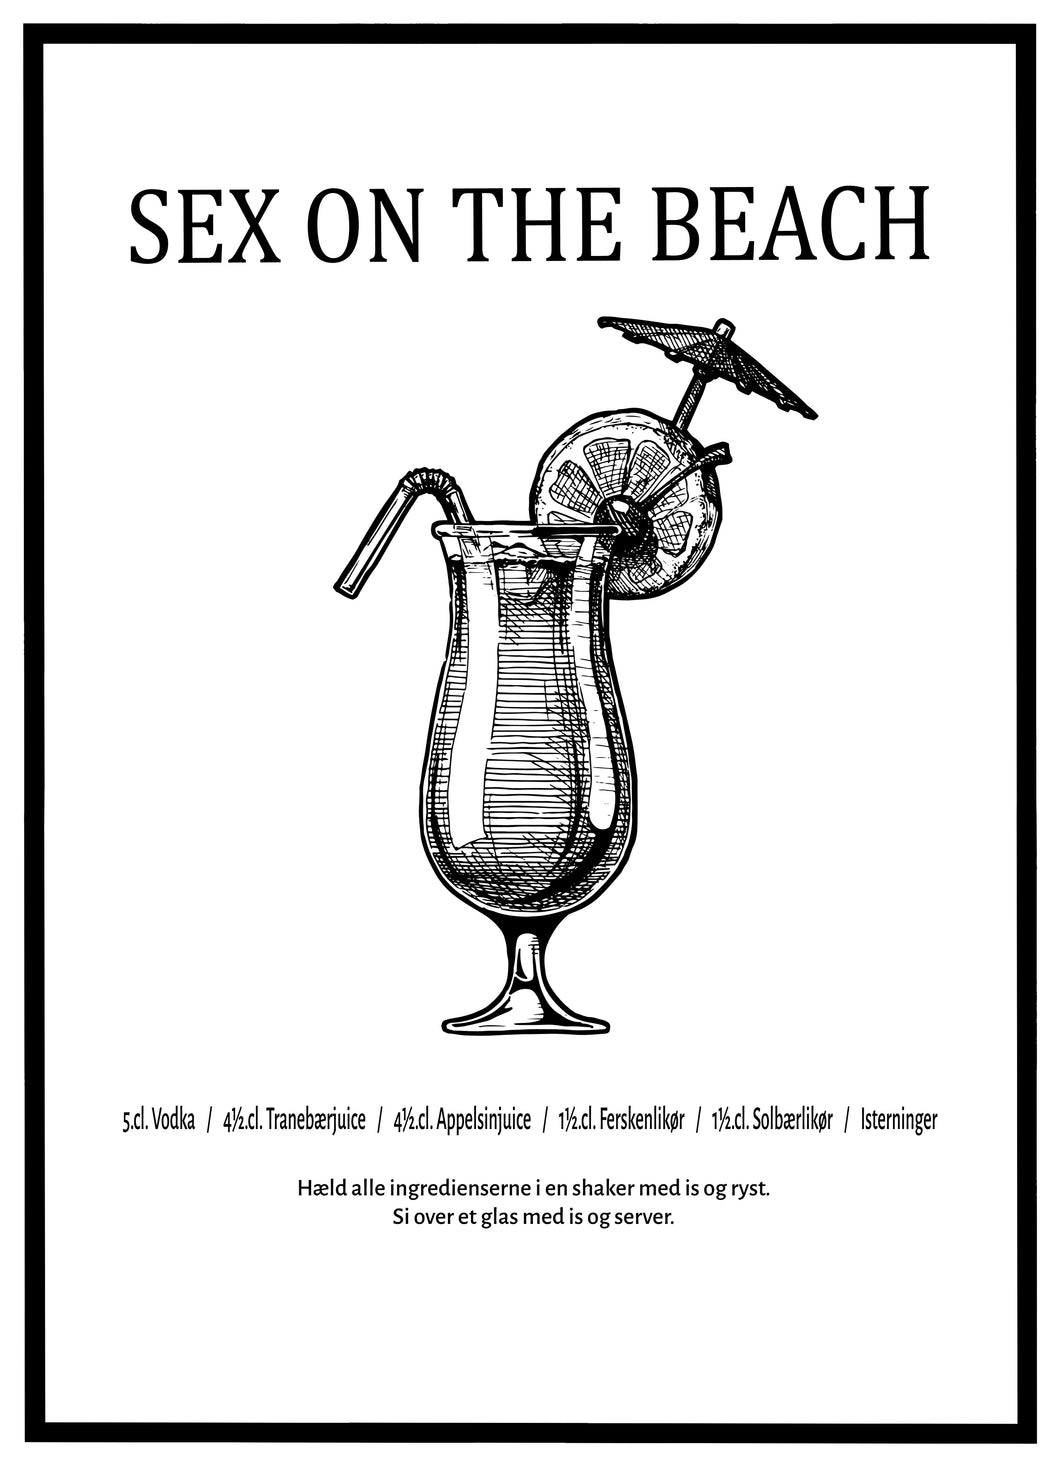 Sex on the Beach - Plakat